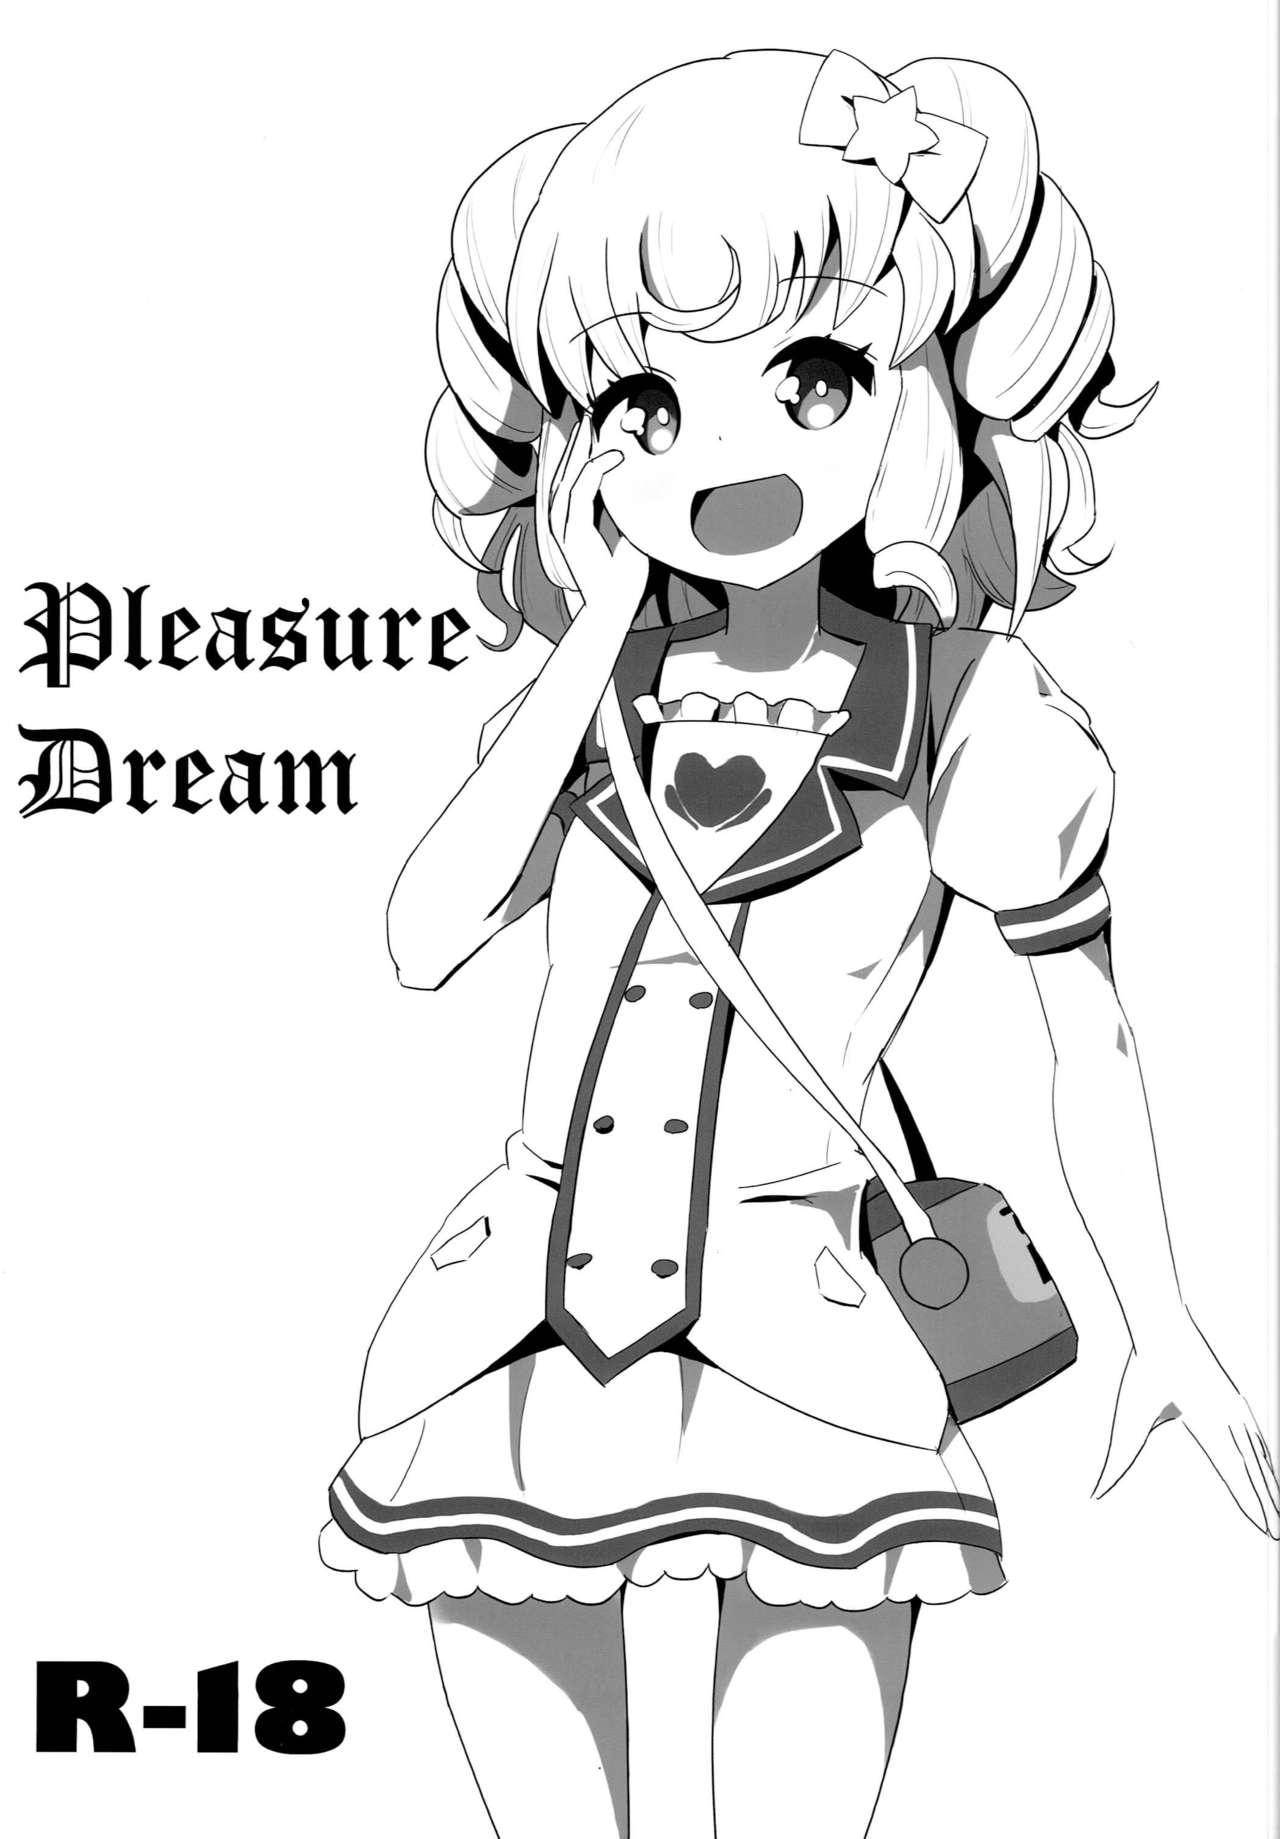 Pleasure Dream 1